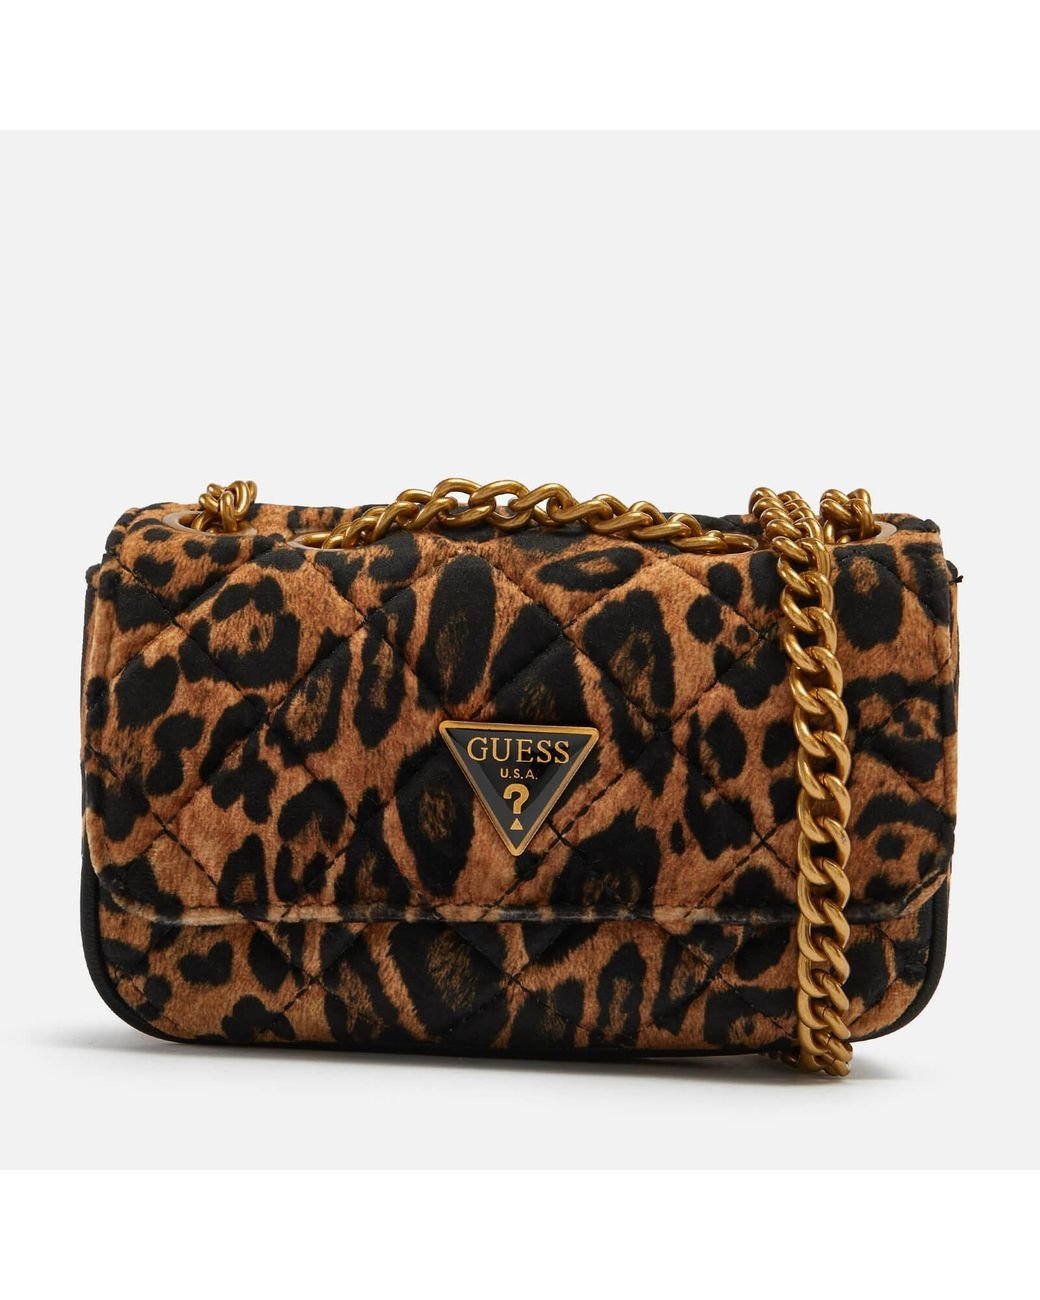 GUESS Georgie Leopard-Print Satchel | Guess handbags, Purses and bags, Bags